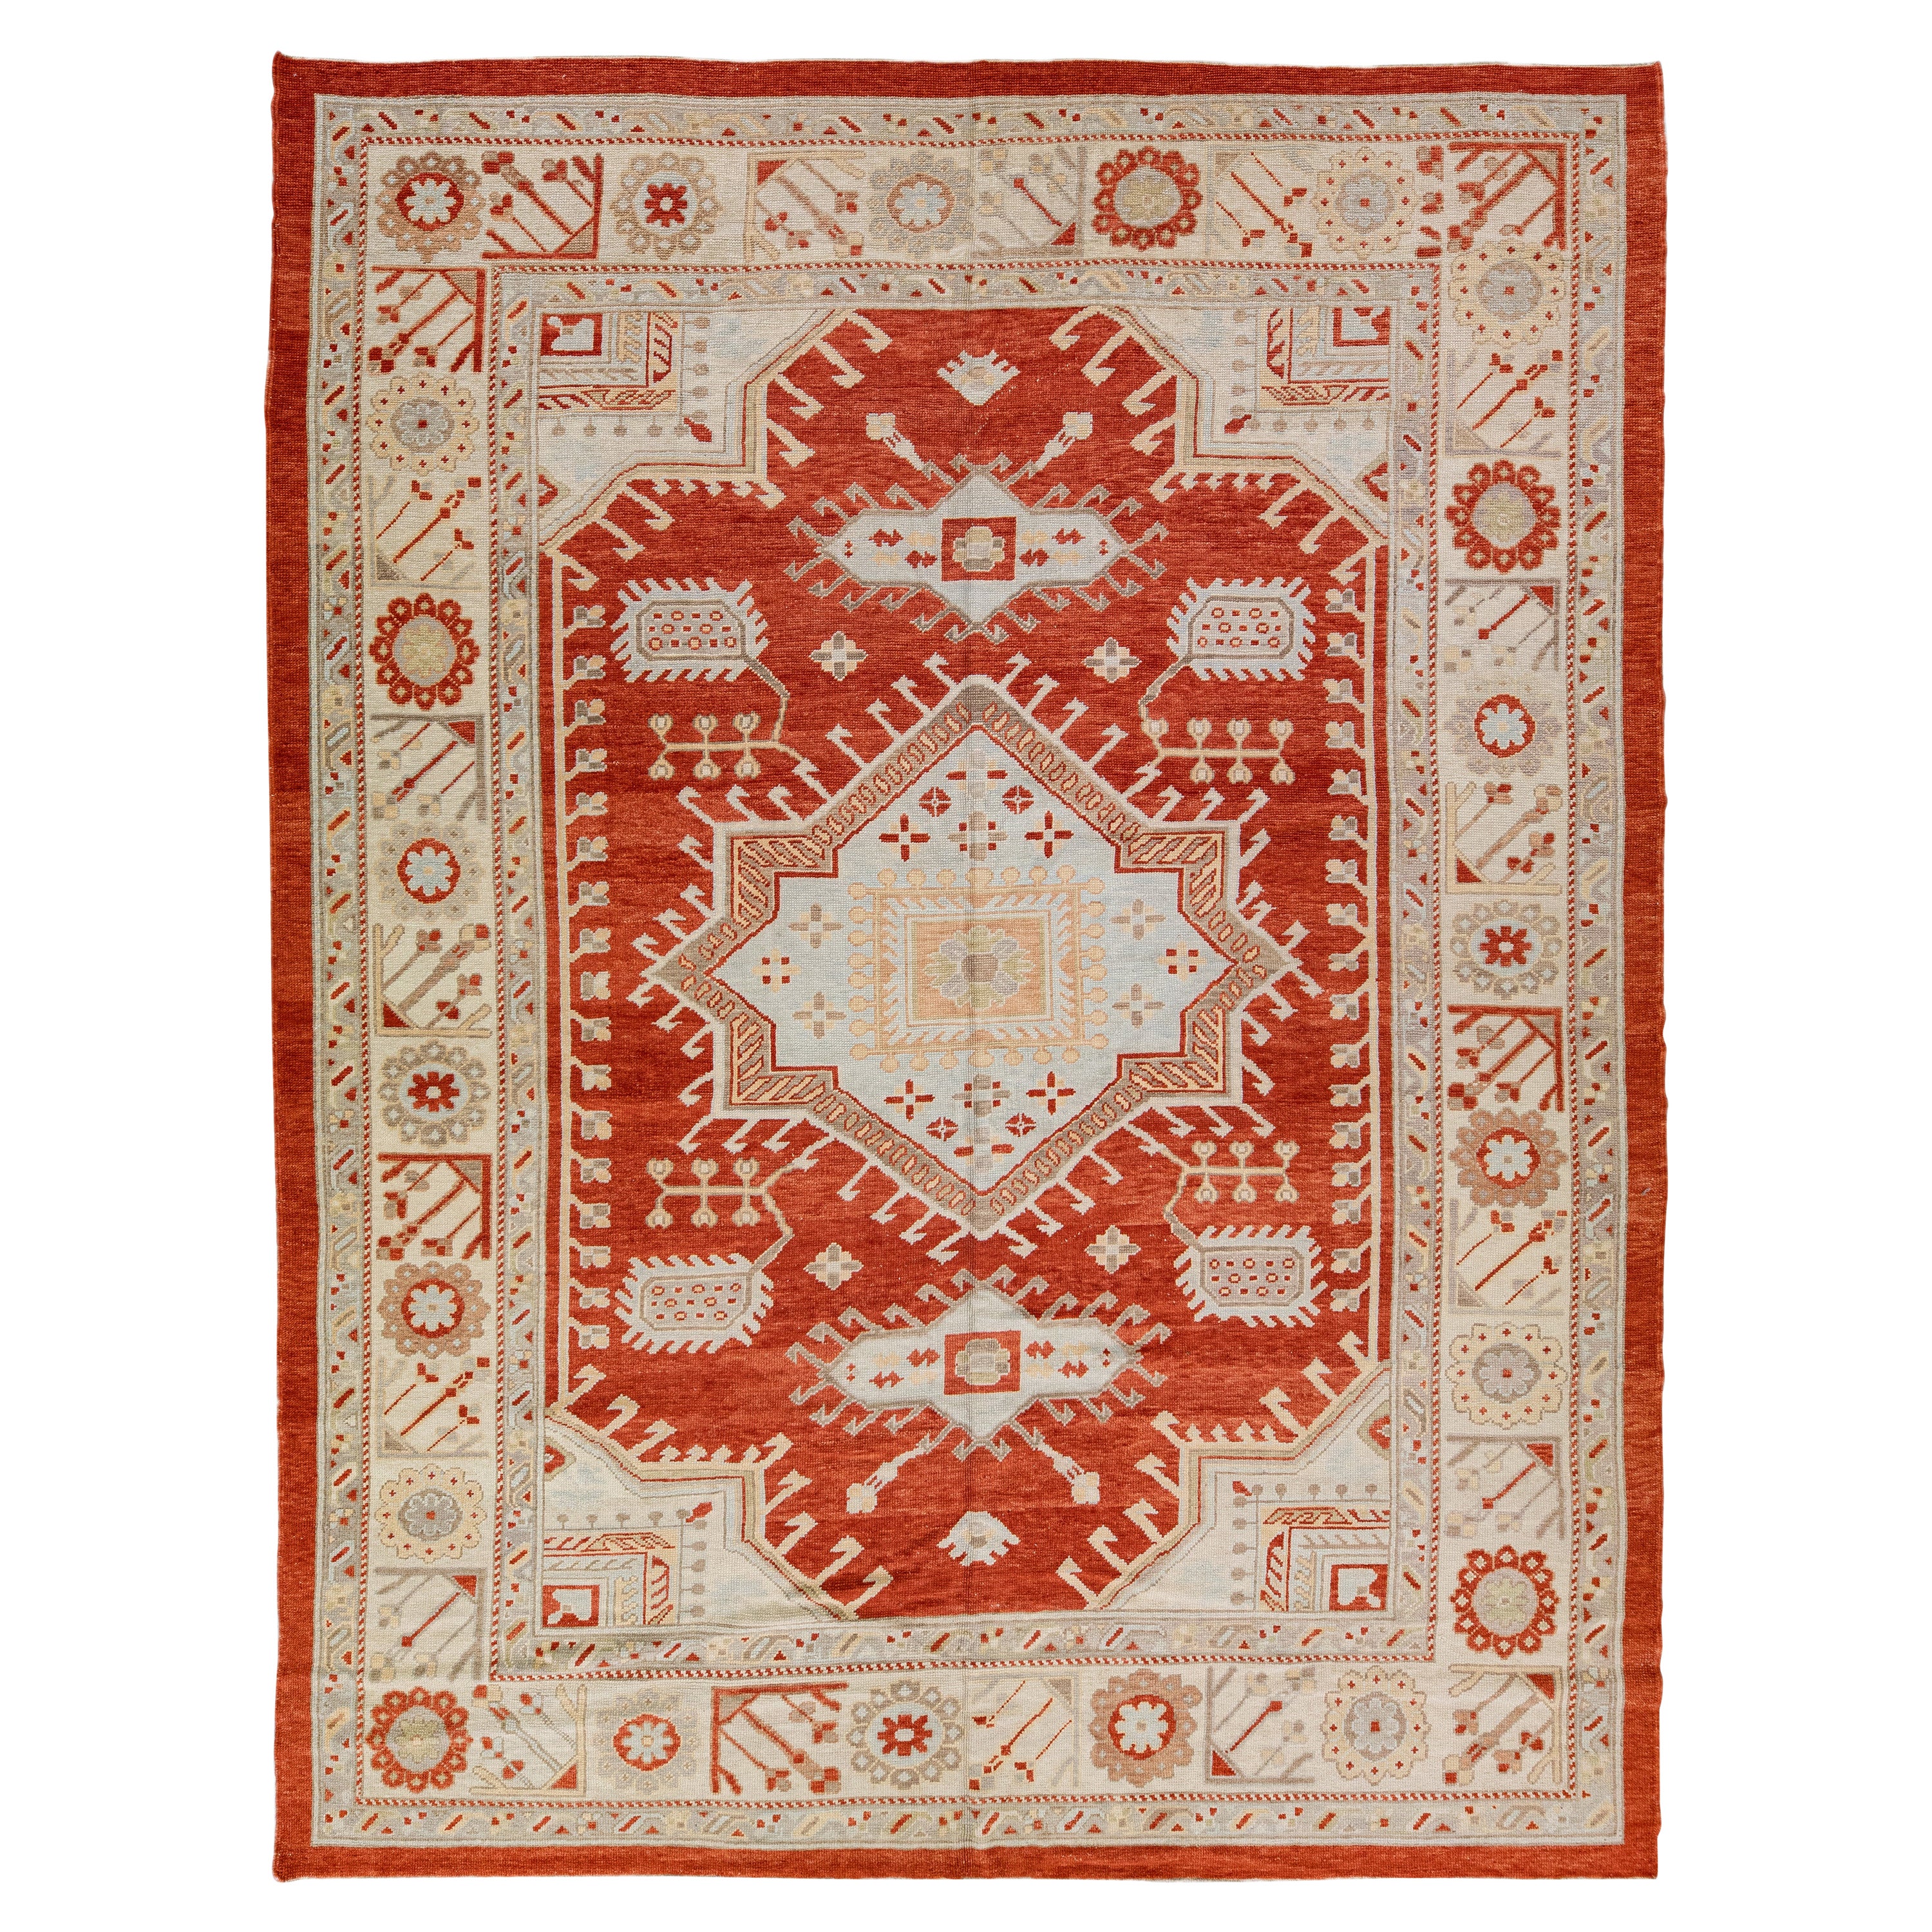 Modern Oushak Handmade Designed Wool Rug with a Terracotta Orange Color